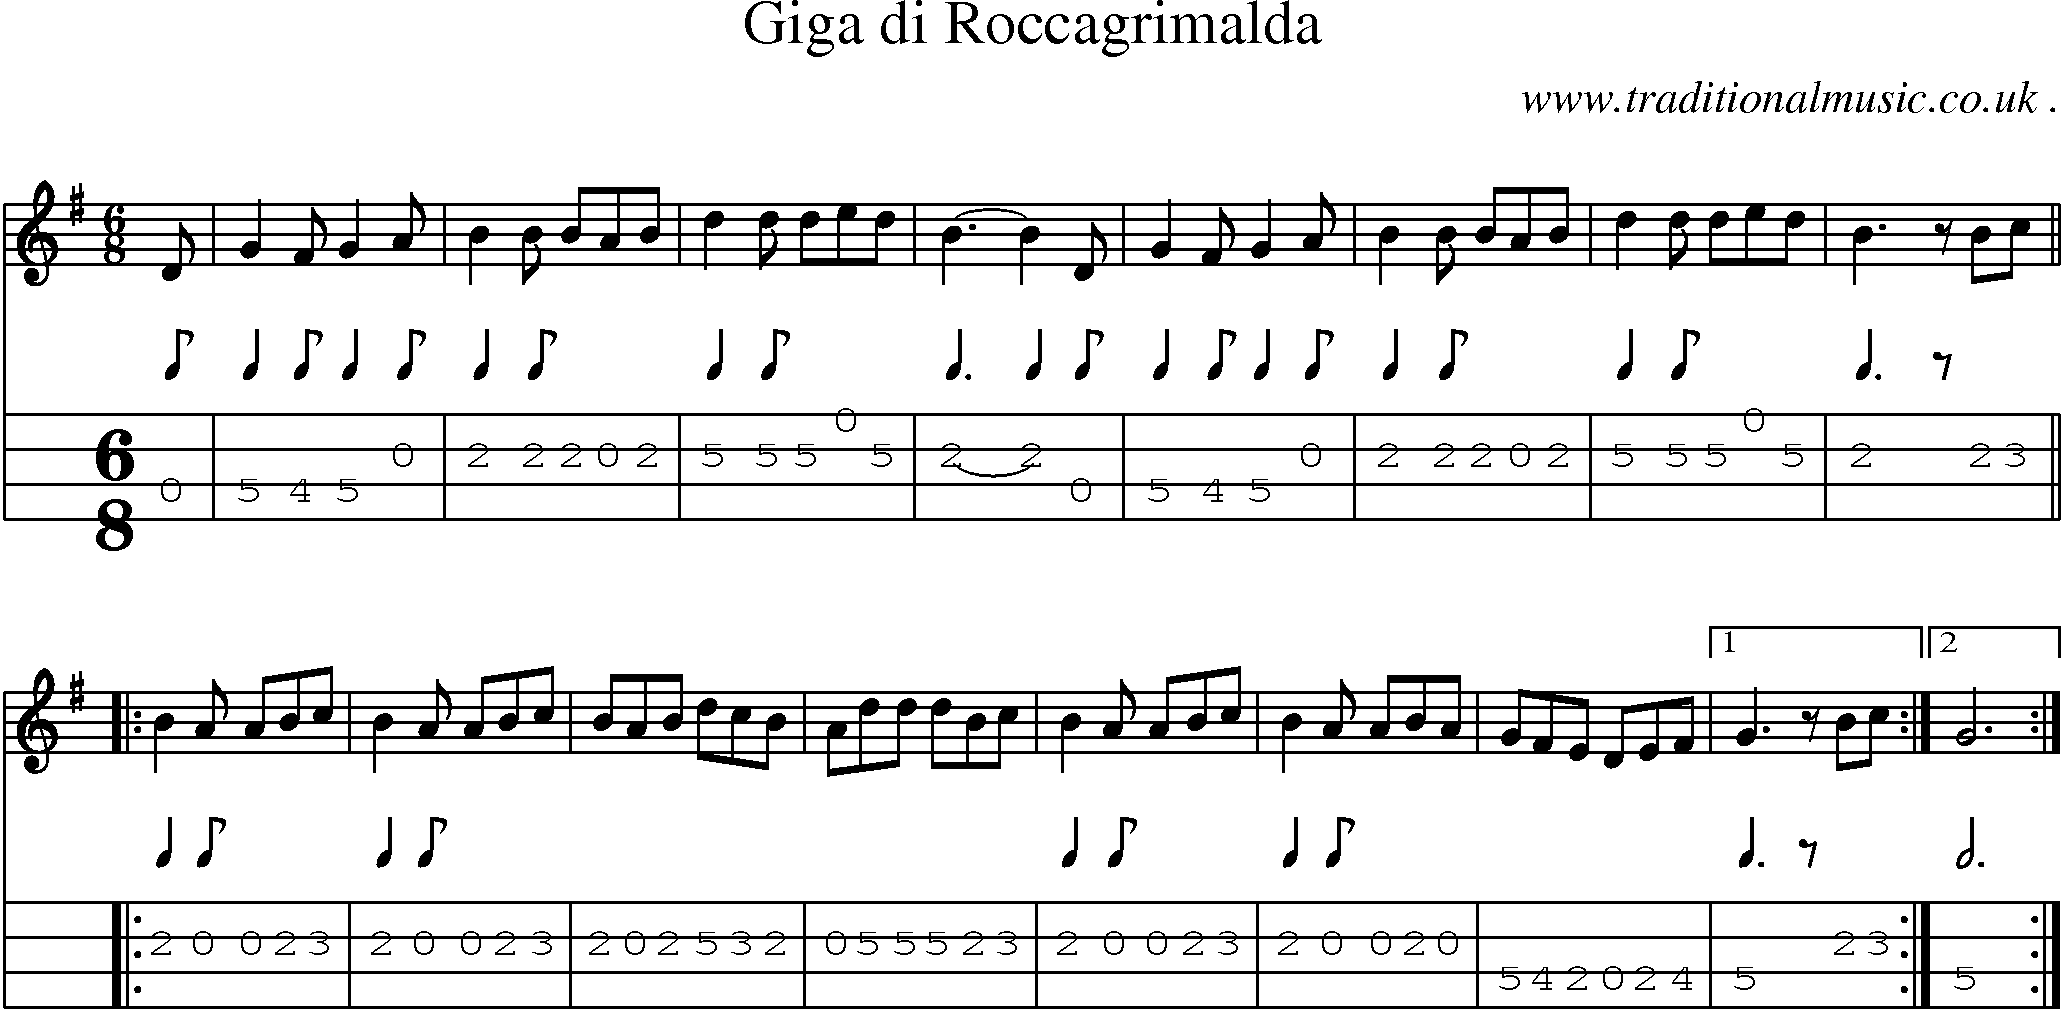 Sheet-Music and Mandolin Tabs for Giga Di Roccagrimalda